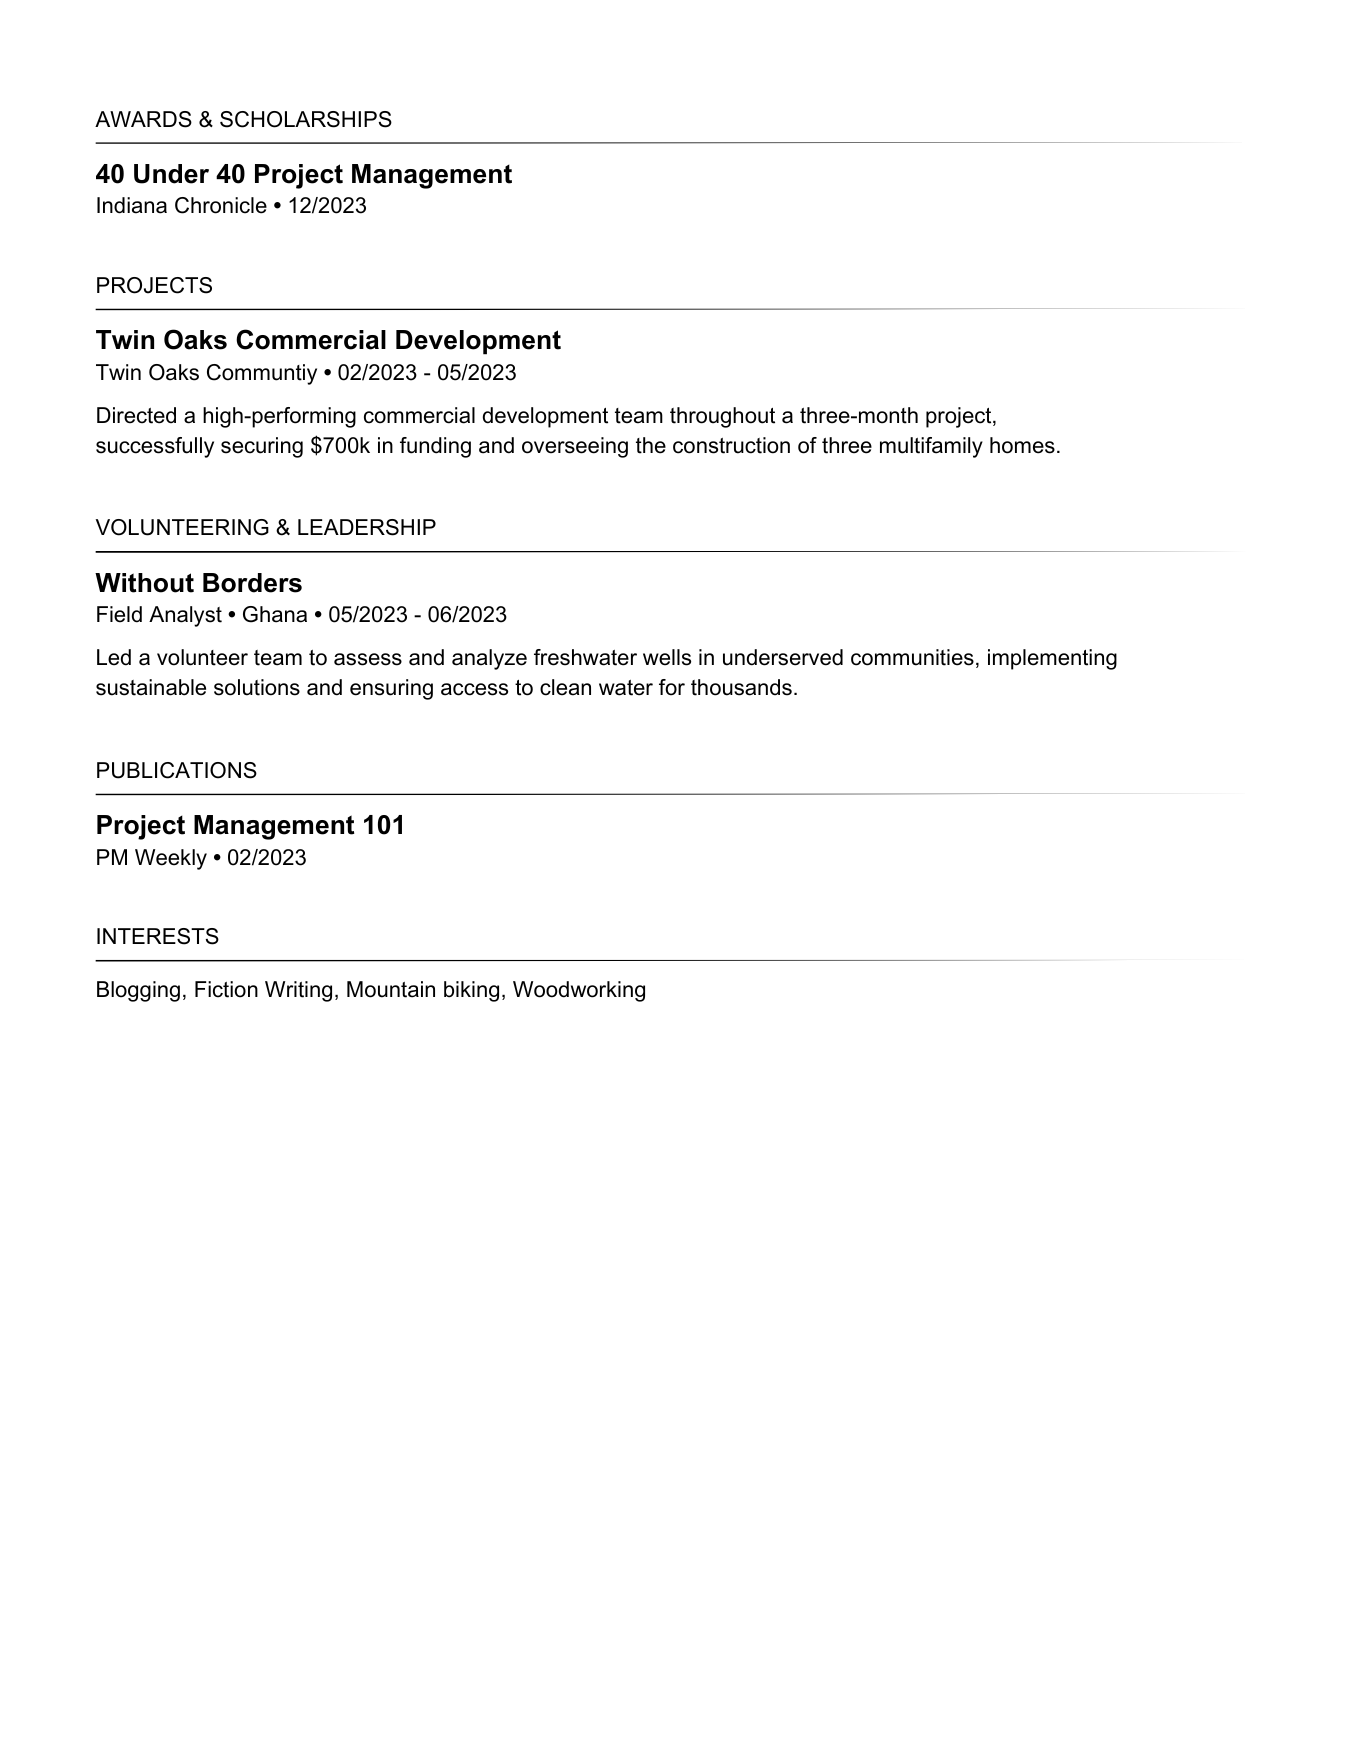 My resume   2023 12 18 04 46 43 (1).pdf (us letter)